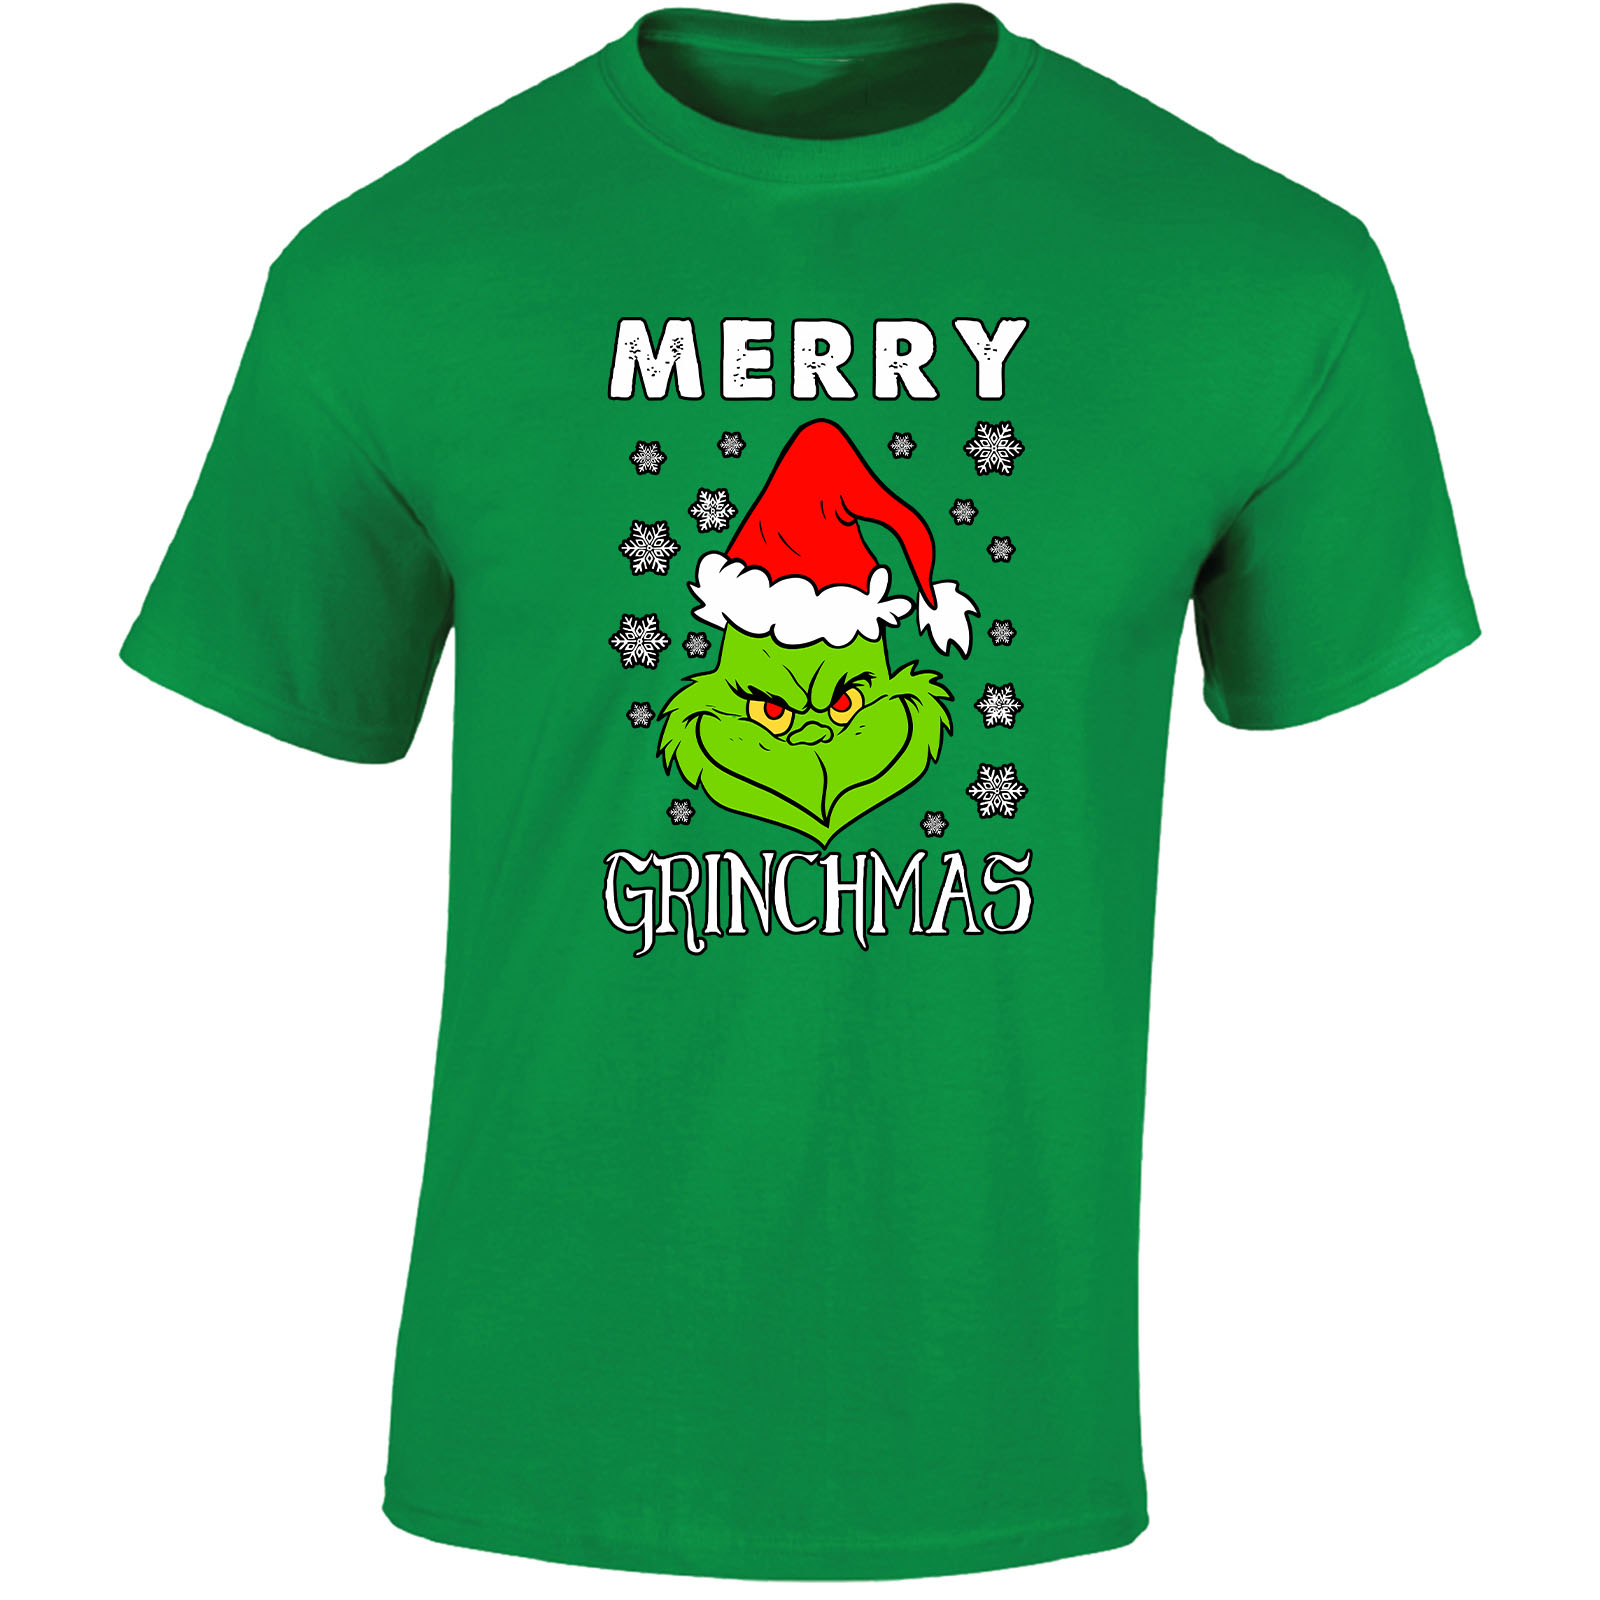 Grinch Mens T-Shirt Xmas Tree Merry Christmas Novelty Festive Top Gift ...